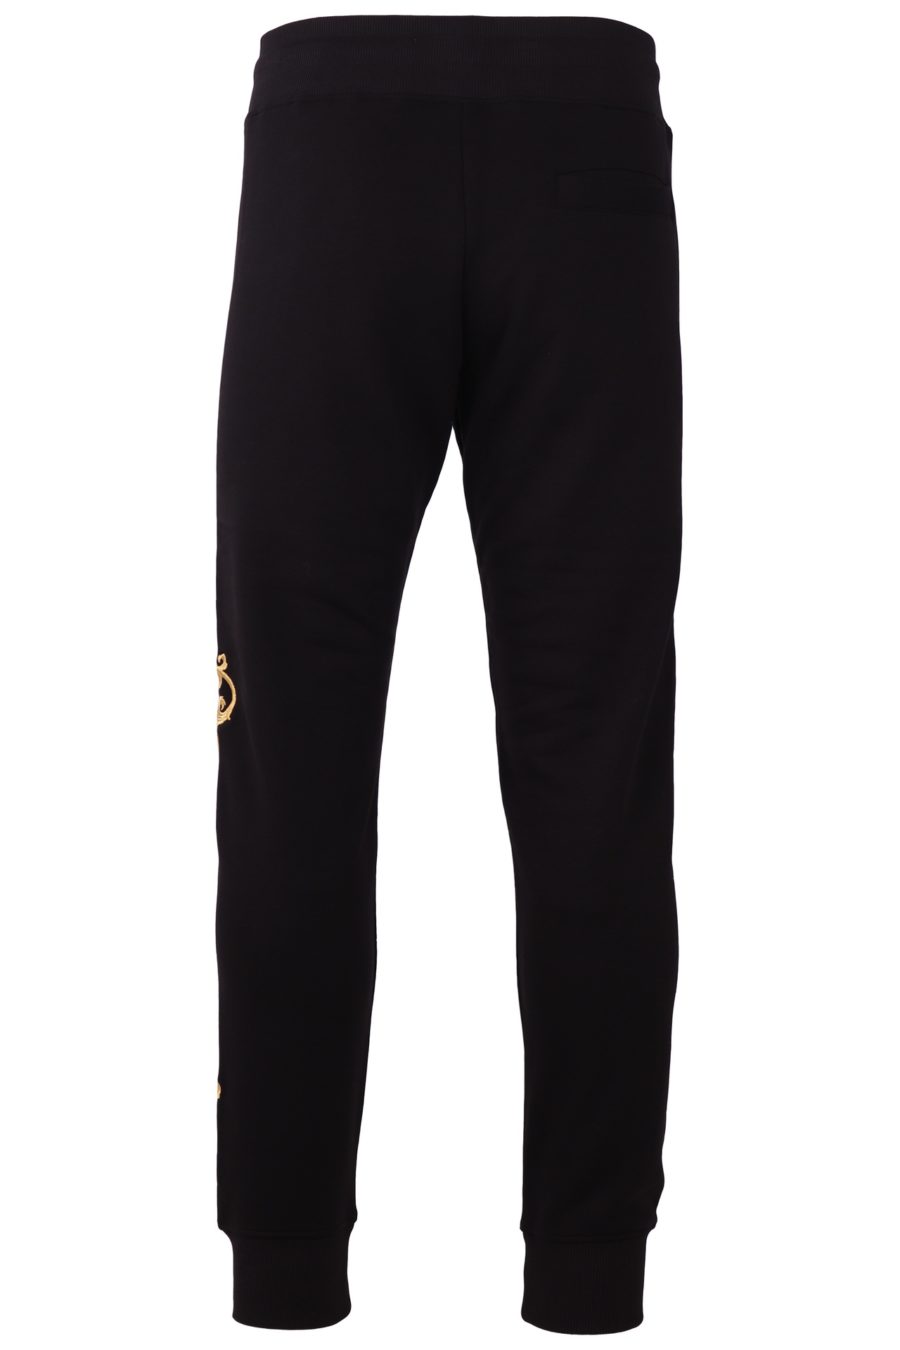 Pantalón de chándal Versace Jeans Couture de color negro con logo bordado - 596c544b6bee74d1ad85dbeaf1766fa75b4c909b